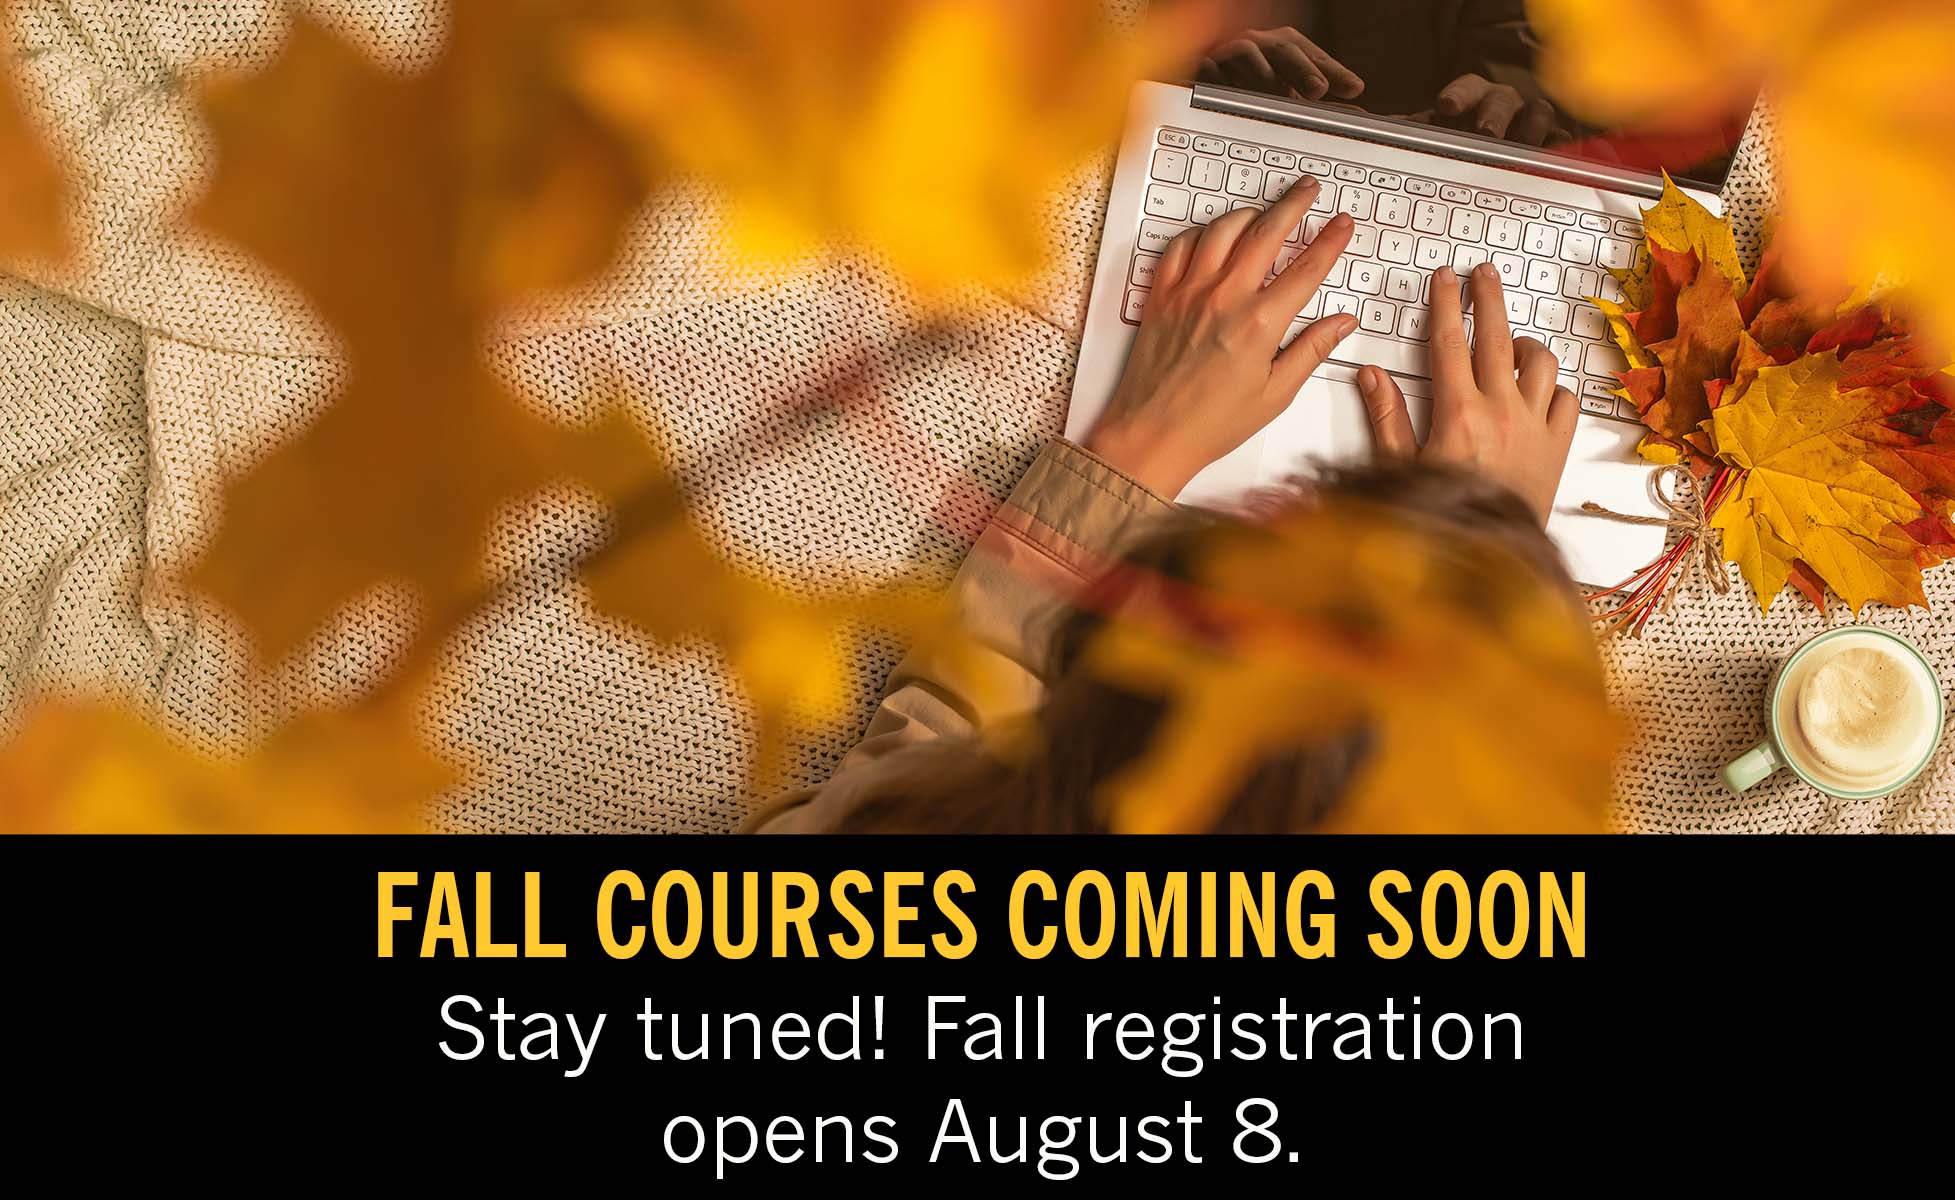 2022-Fall-Courses-Coming-Soon-Lifelong-Learning-v2.jpg